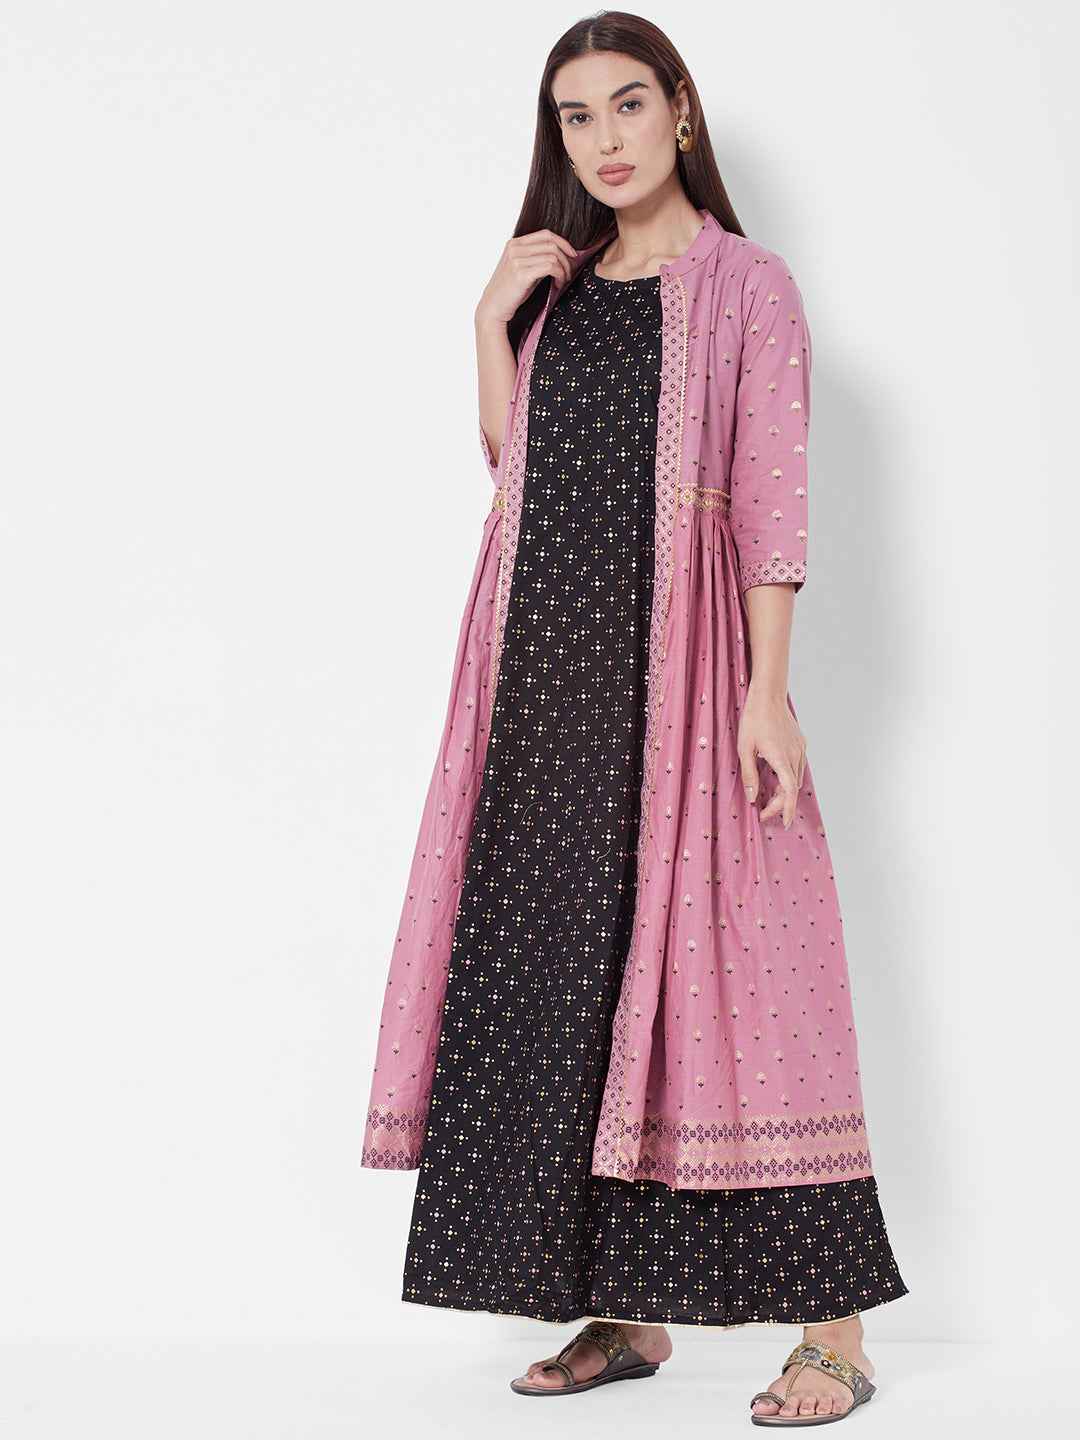 Vedic Ethnic Motifs Printed Cotton Maxi Dress With Long Shrug